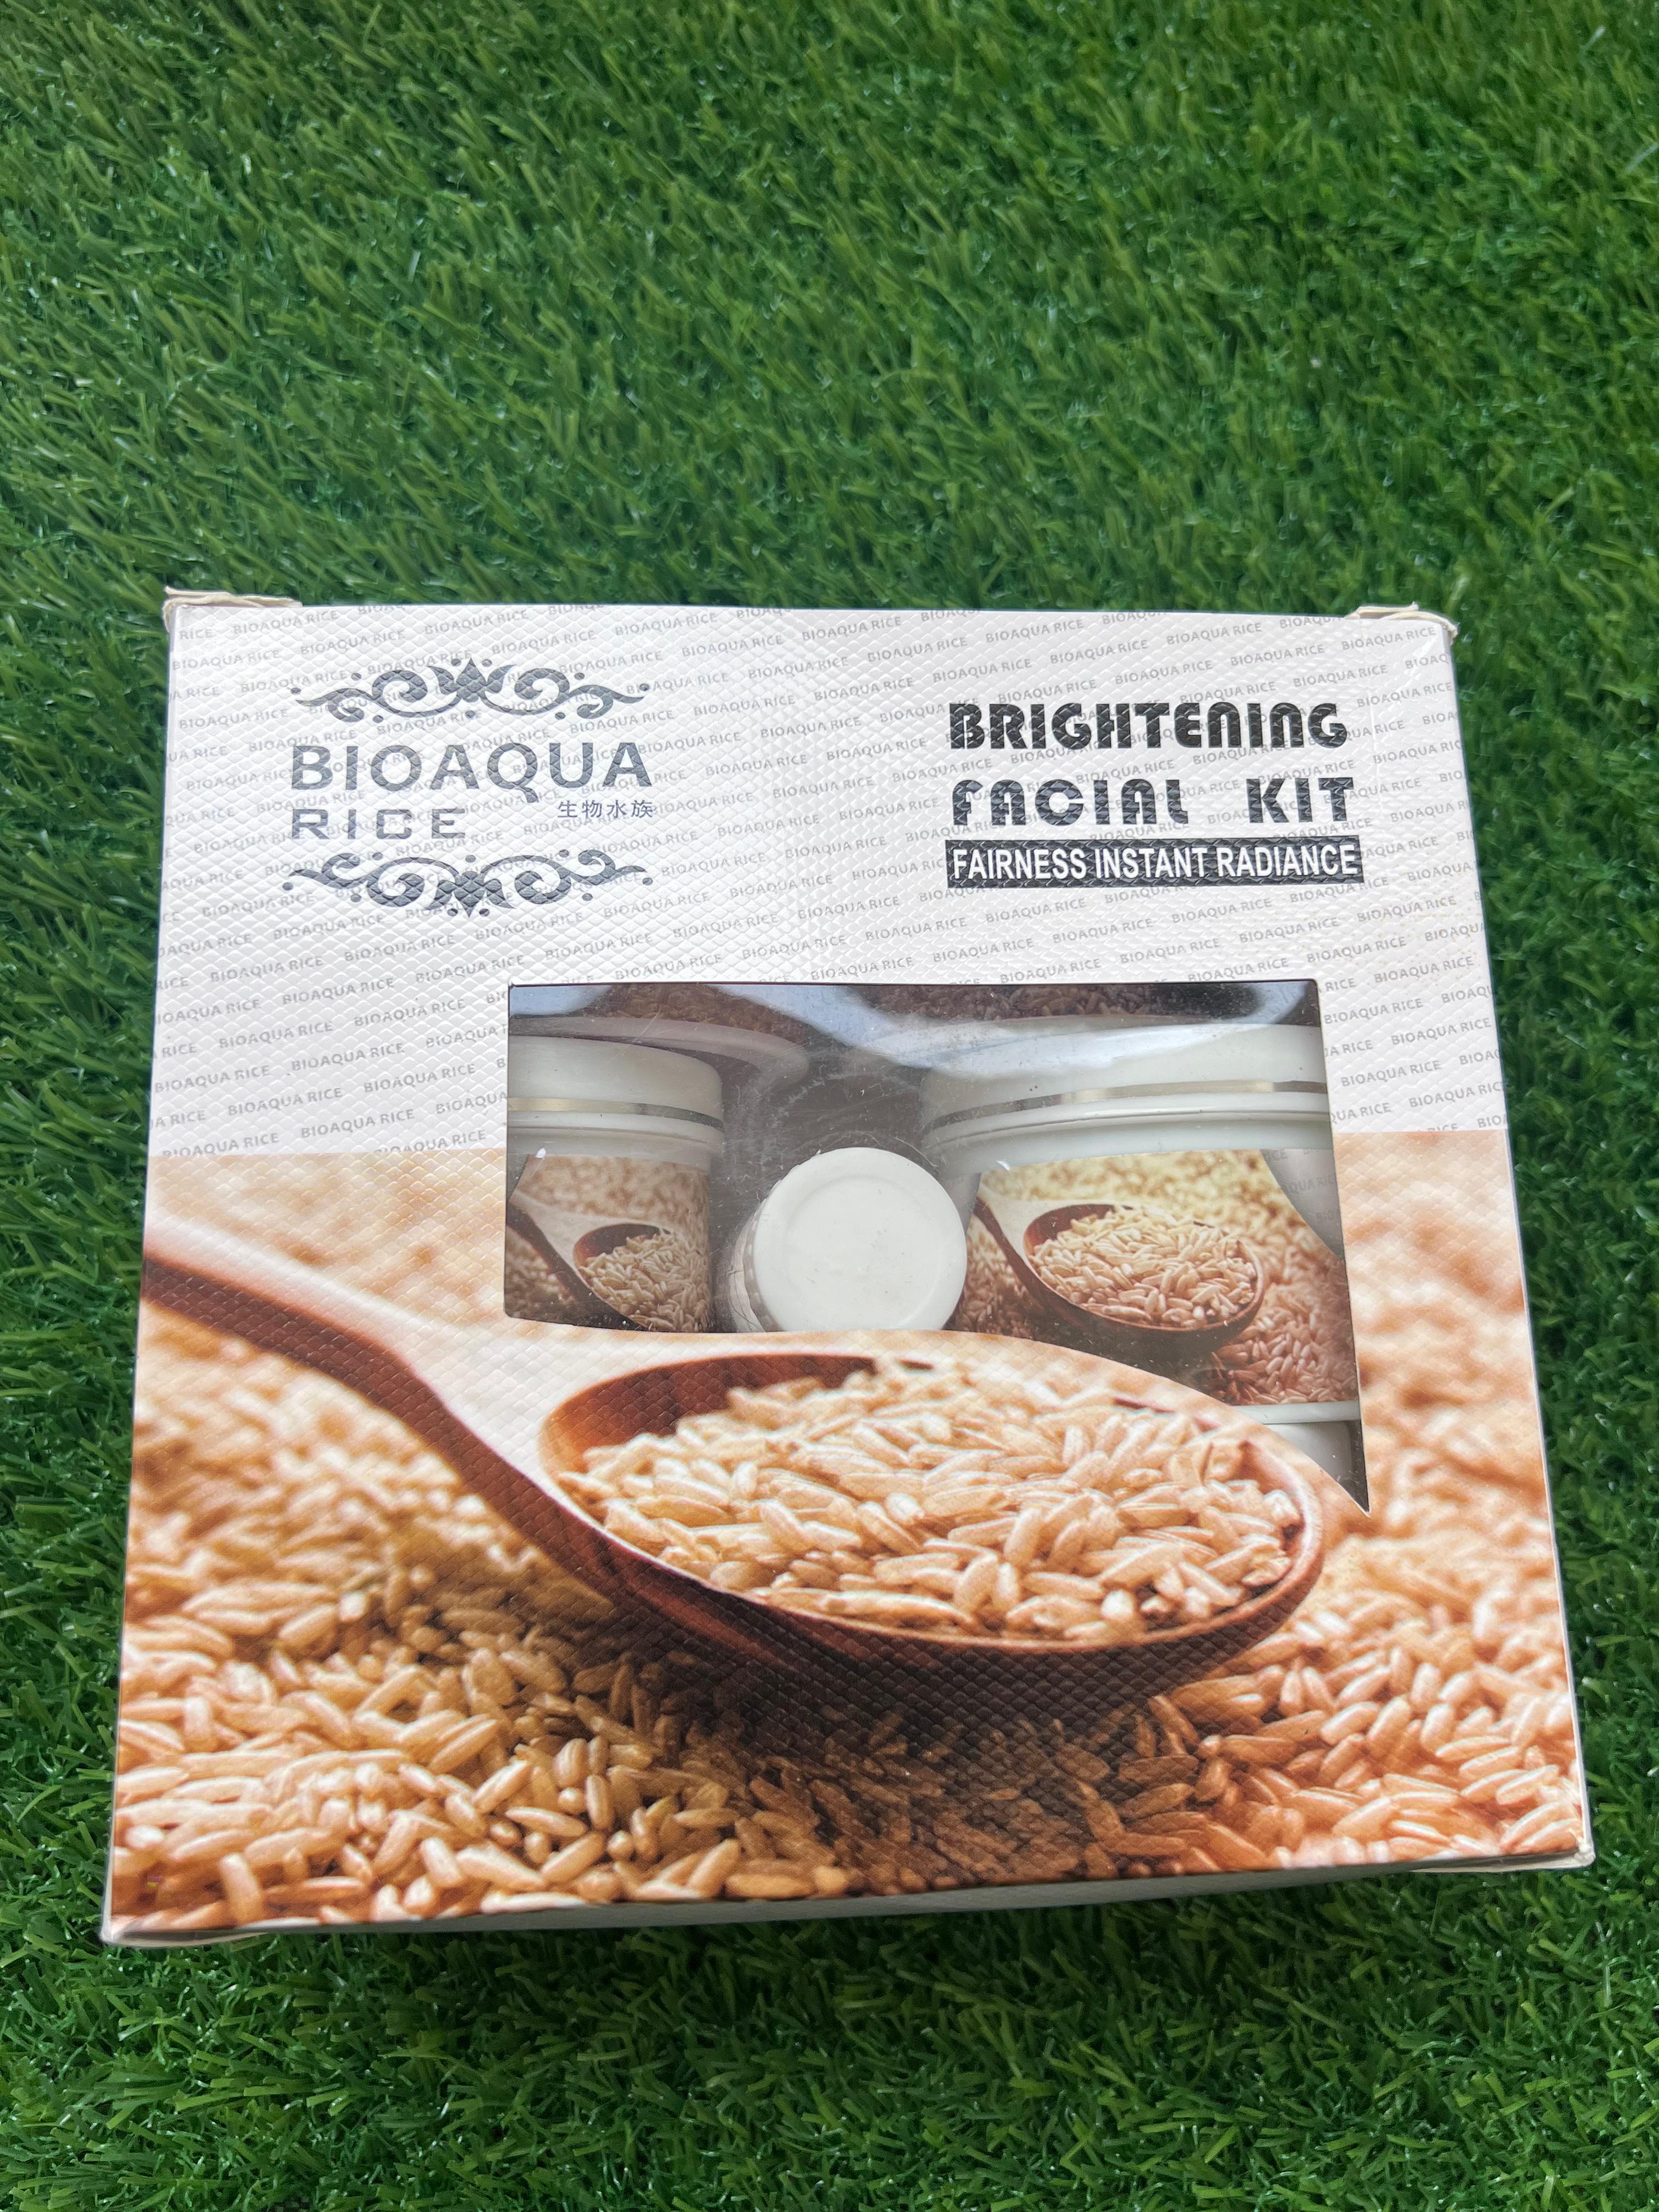 BIOAQUA Rice Brightening Face Facial kit pack of 7 item